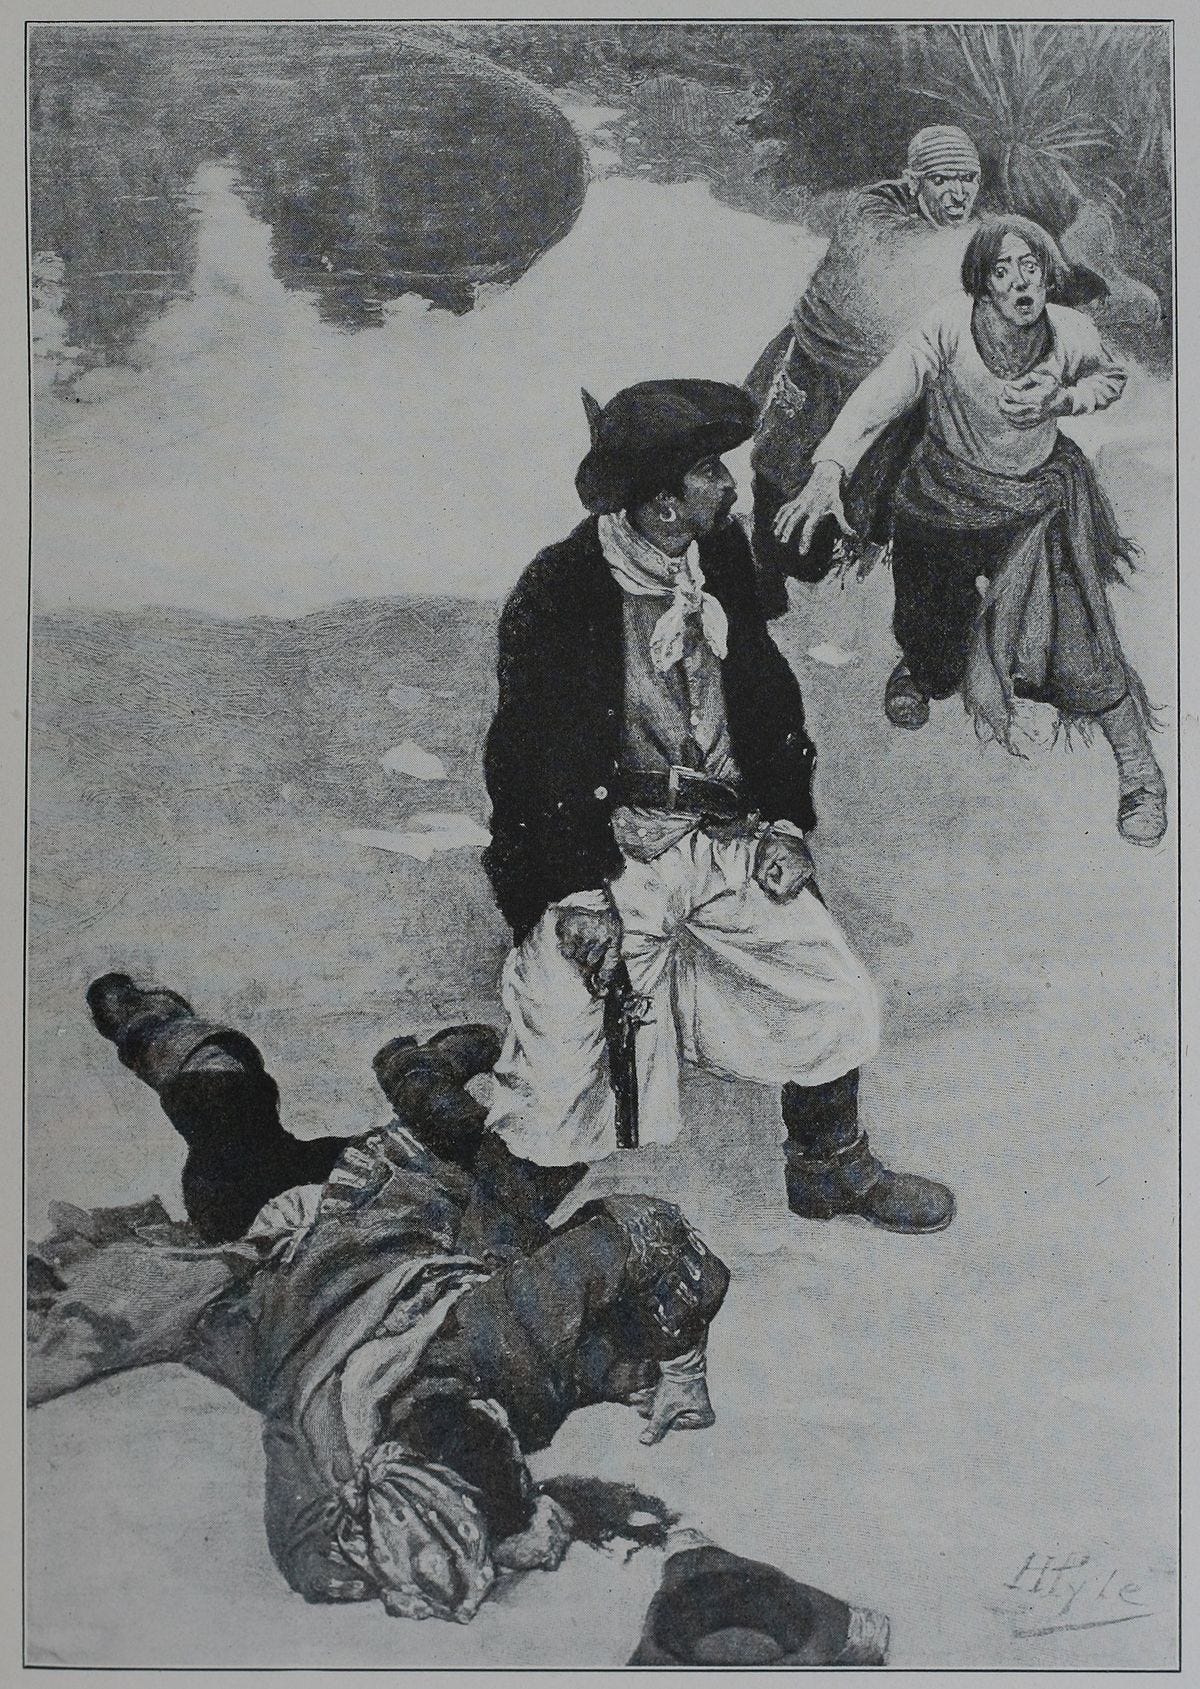 File:Pyle pirate murder.jpg - Wikimedia Commons